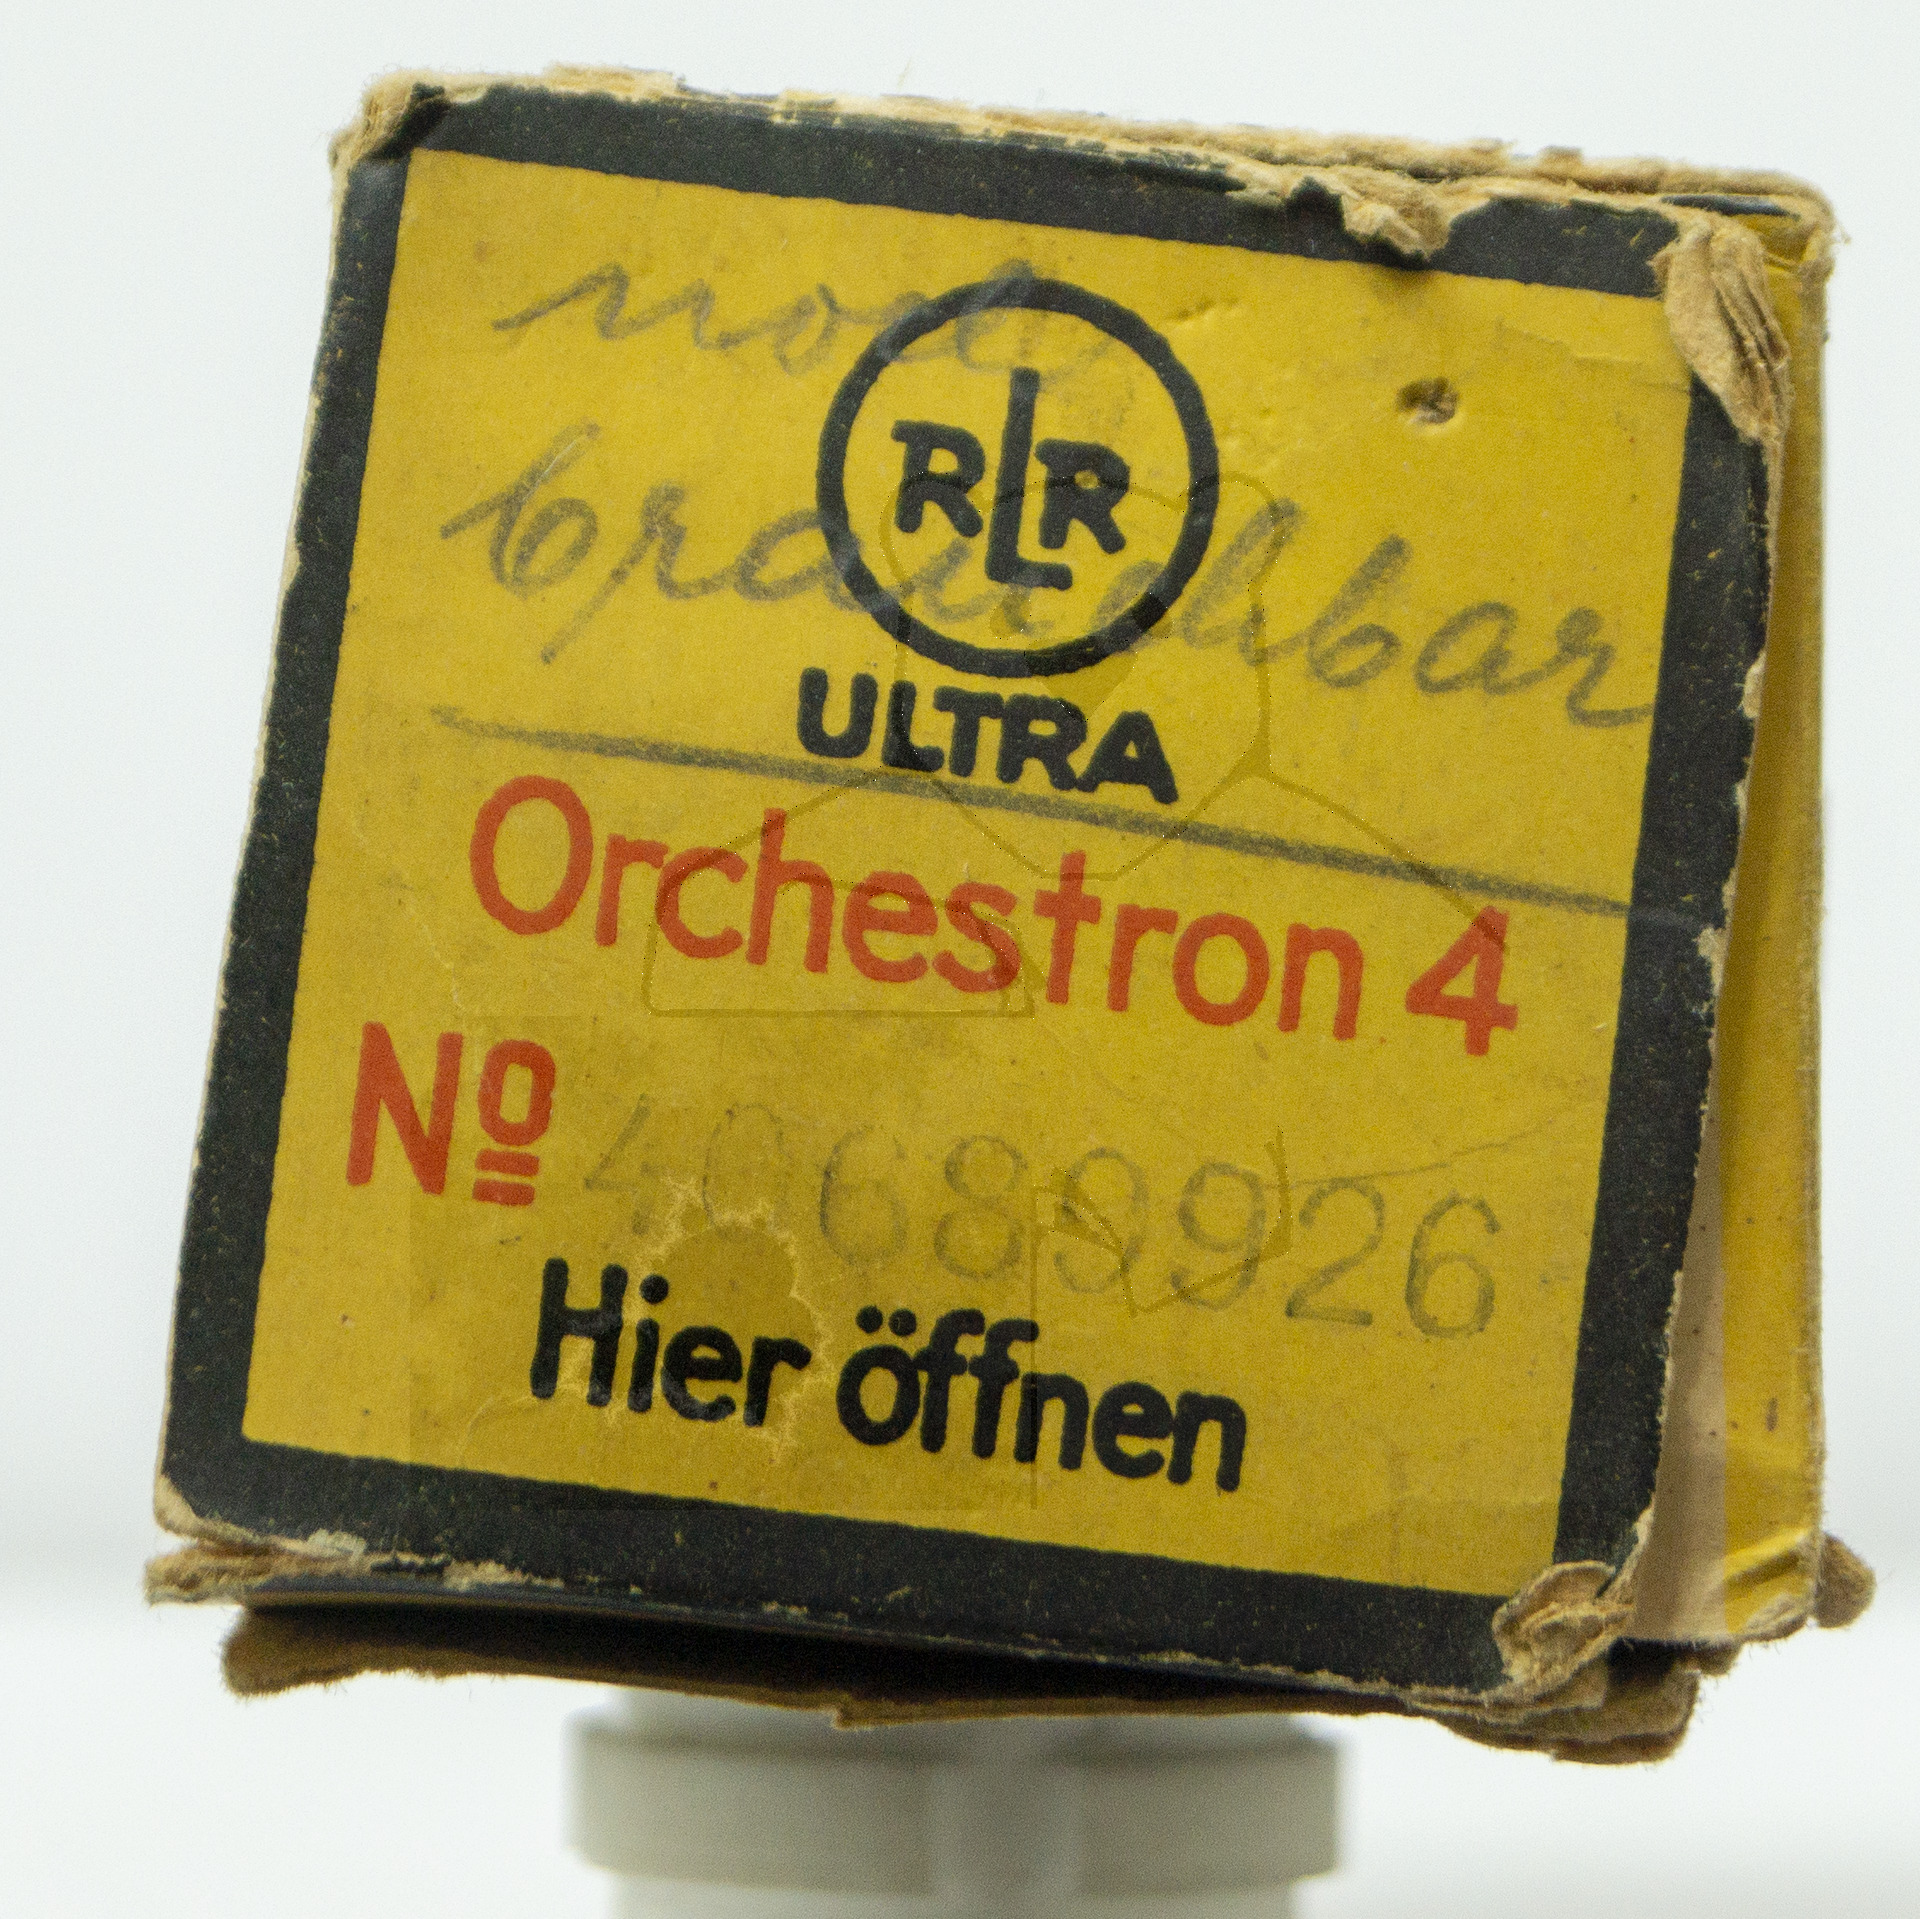 Röhre Ultra Orchestron 4 #7229 Verpackung Bild 3